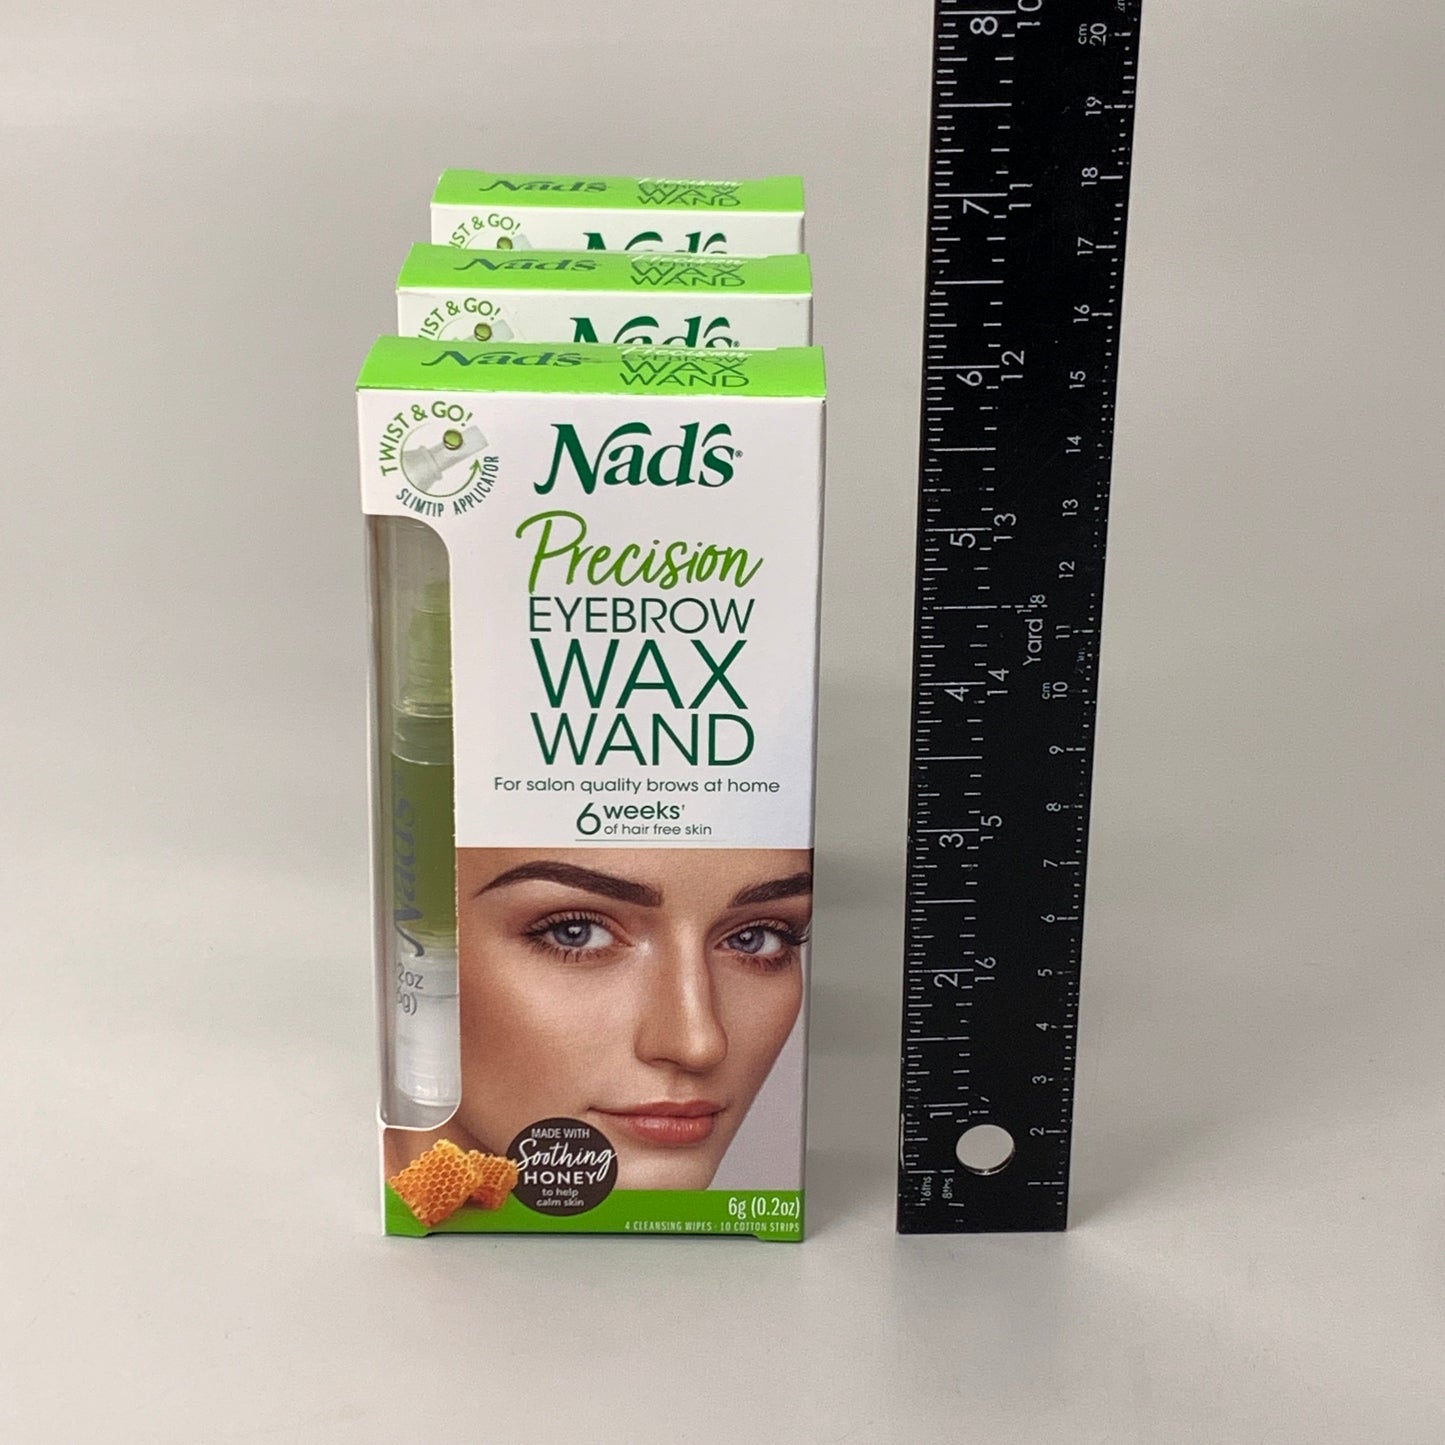 NADS Precision Eyebrow Wand Waxing Kit Soothing Honey 0.2oz 0677EN06